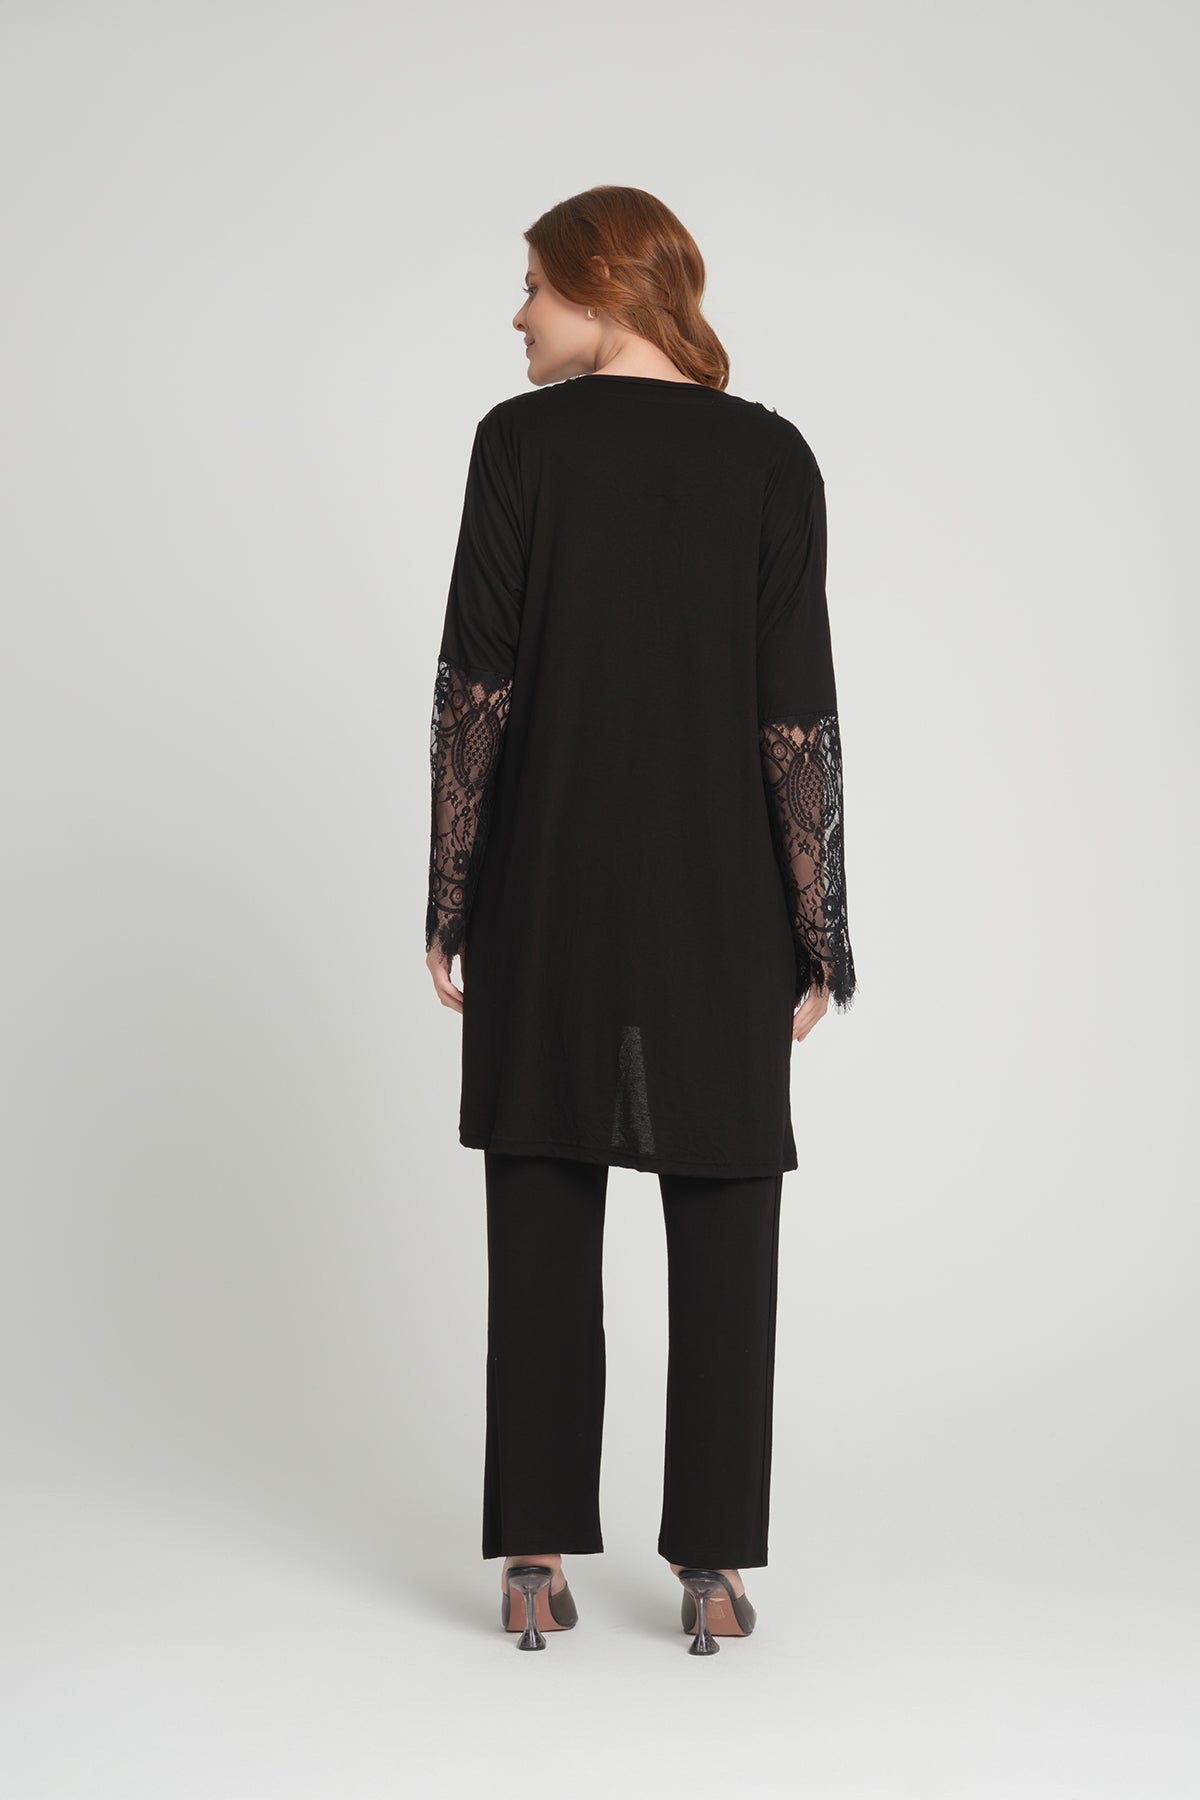 Shopymommy 208 3-Pieces Maternity & Nursing Pajamas With Lace Sleeve Robe Black